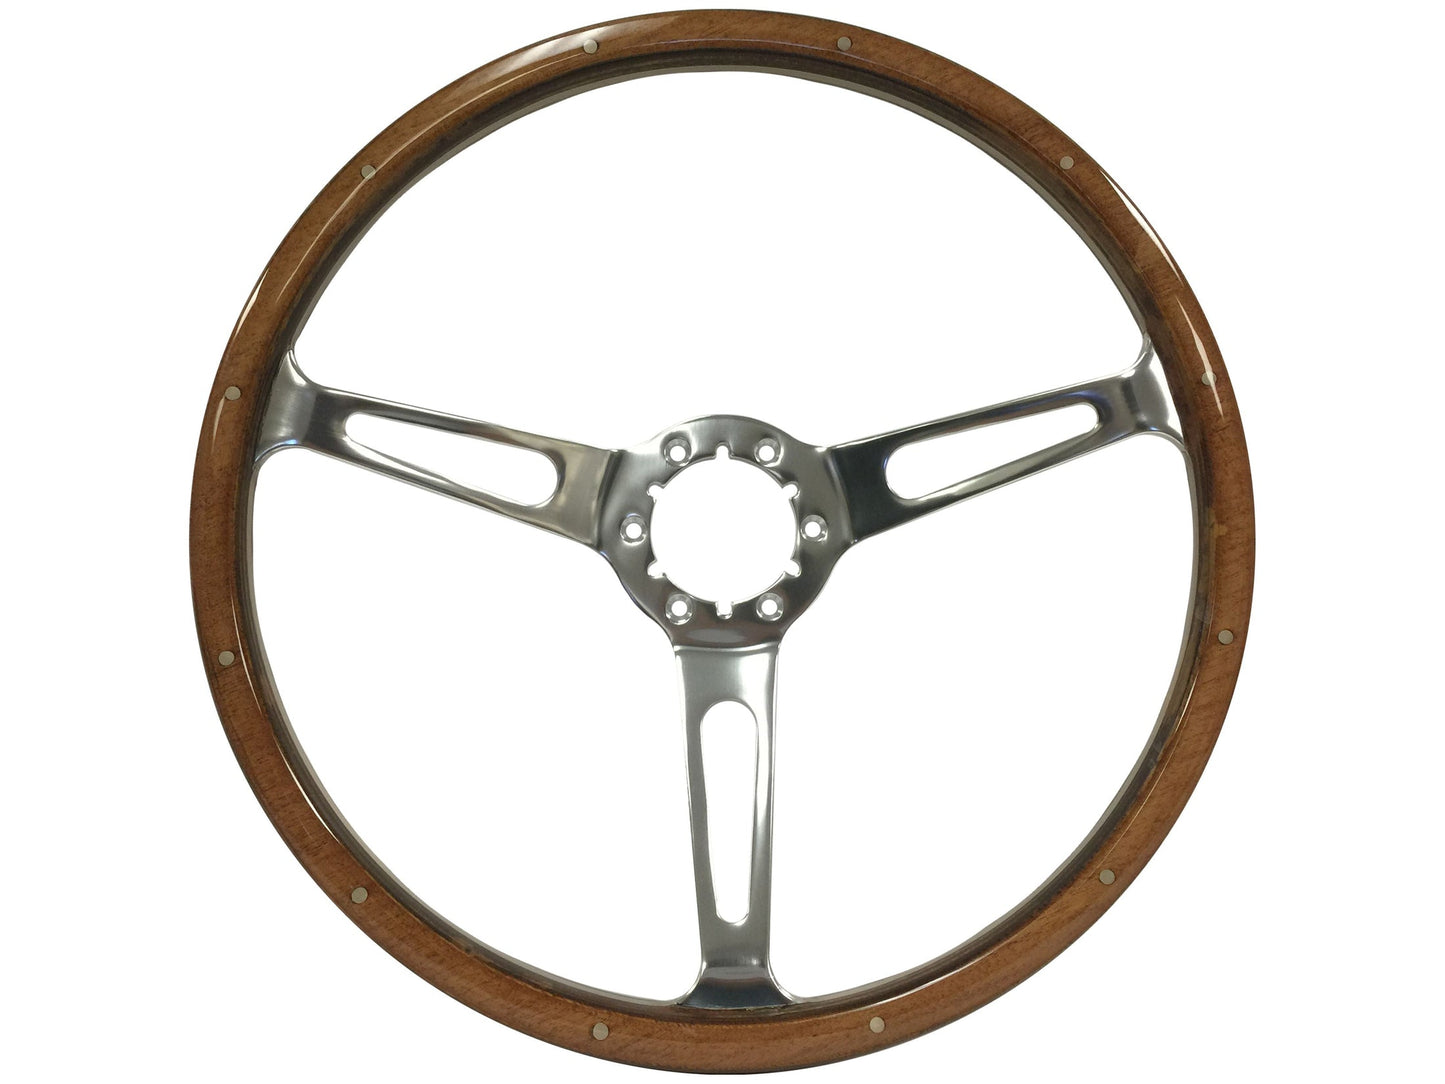 1969-89 Cadillac Steering Wheel Kit | Deluxe Walnut Wood | ST3553